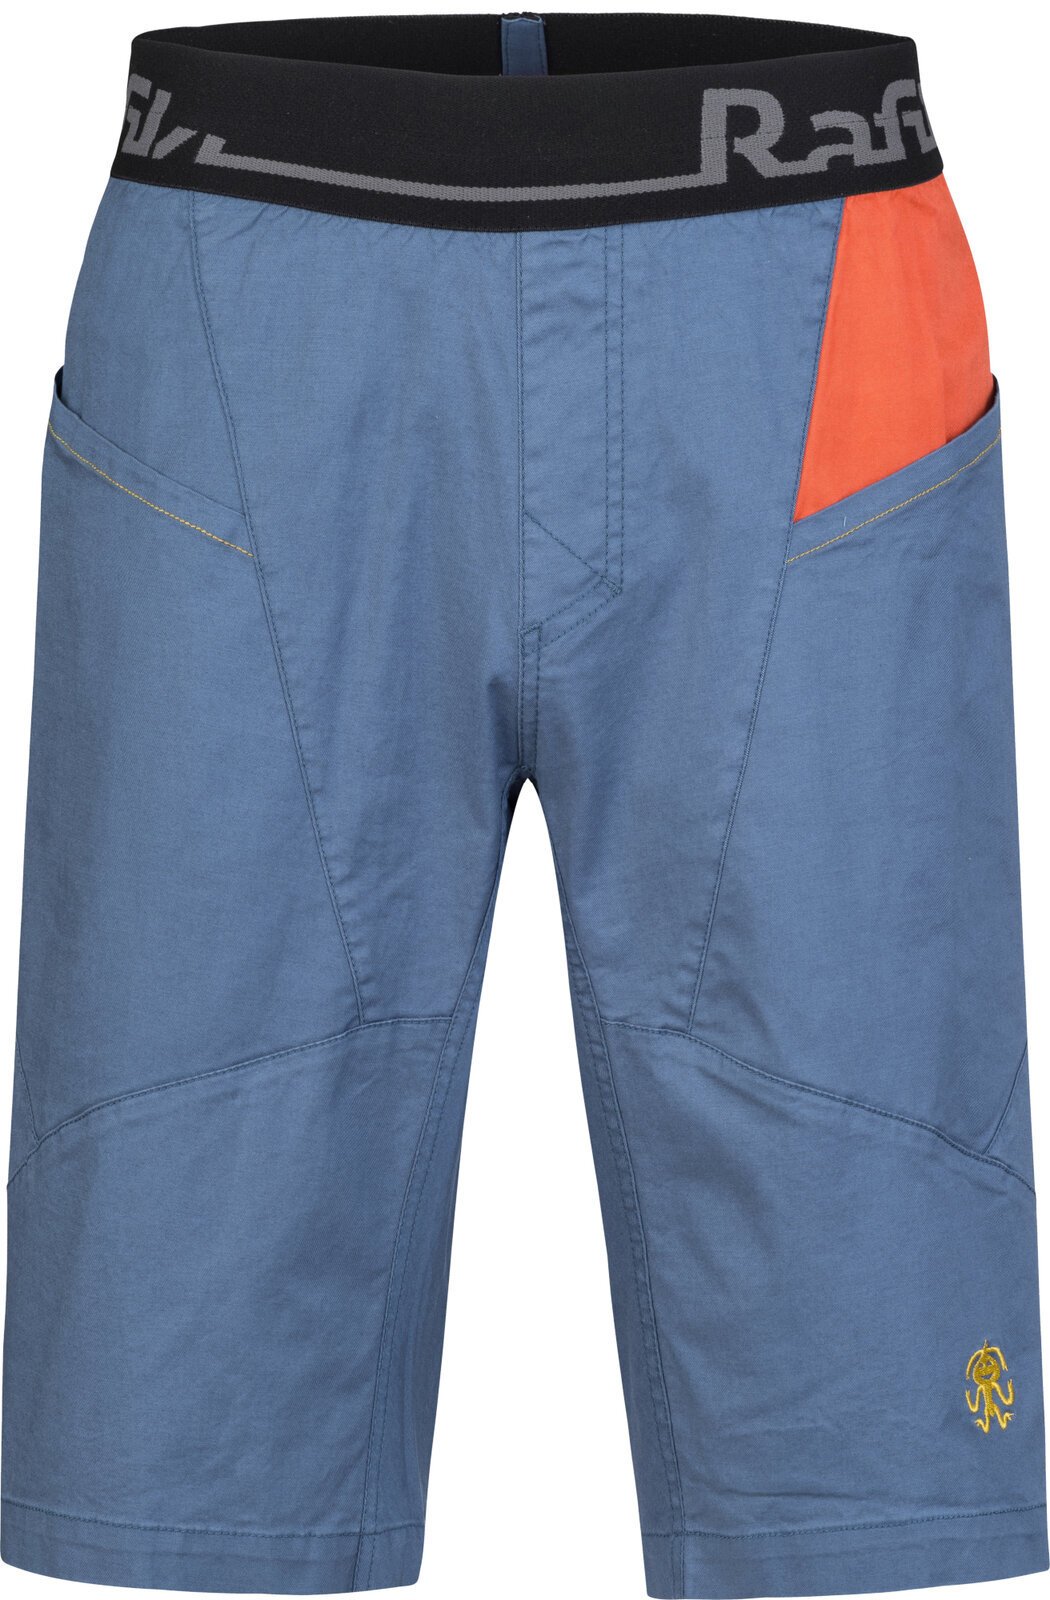 Friluftsliv shorts Rafiki Megos Man Shorts Ensign Blue/Clay XS Friluftsliv shorts